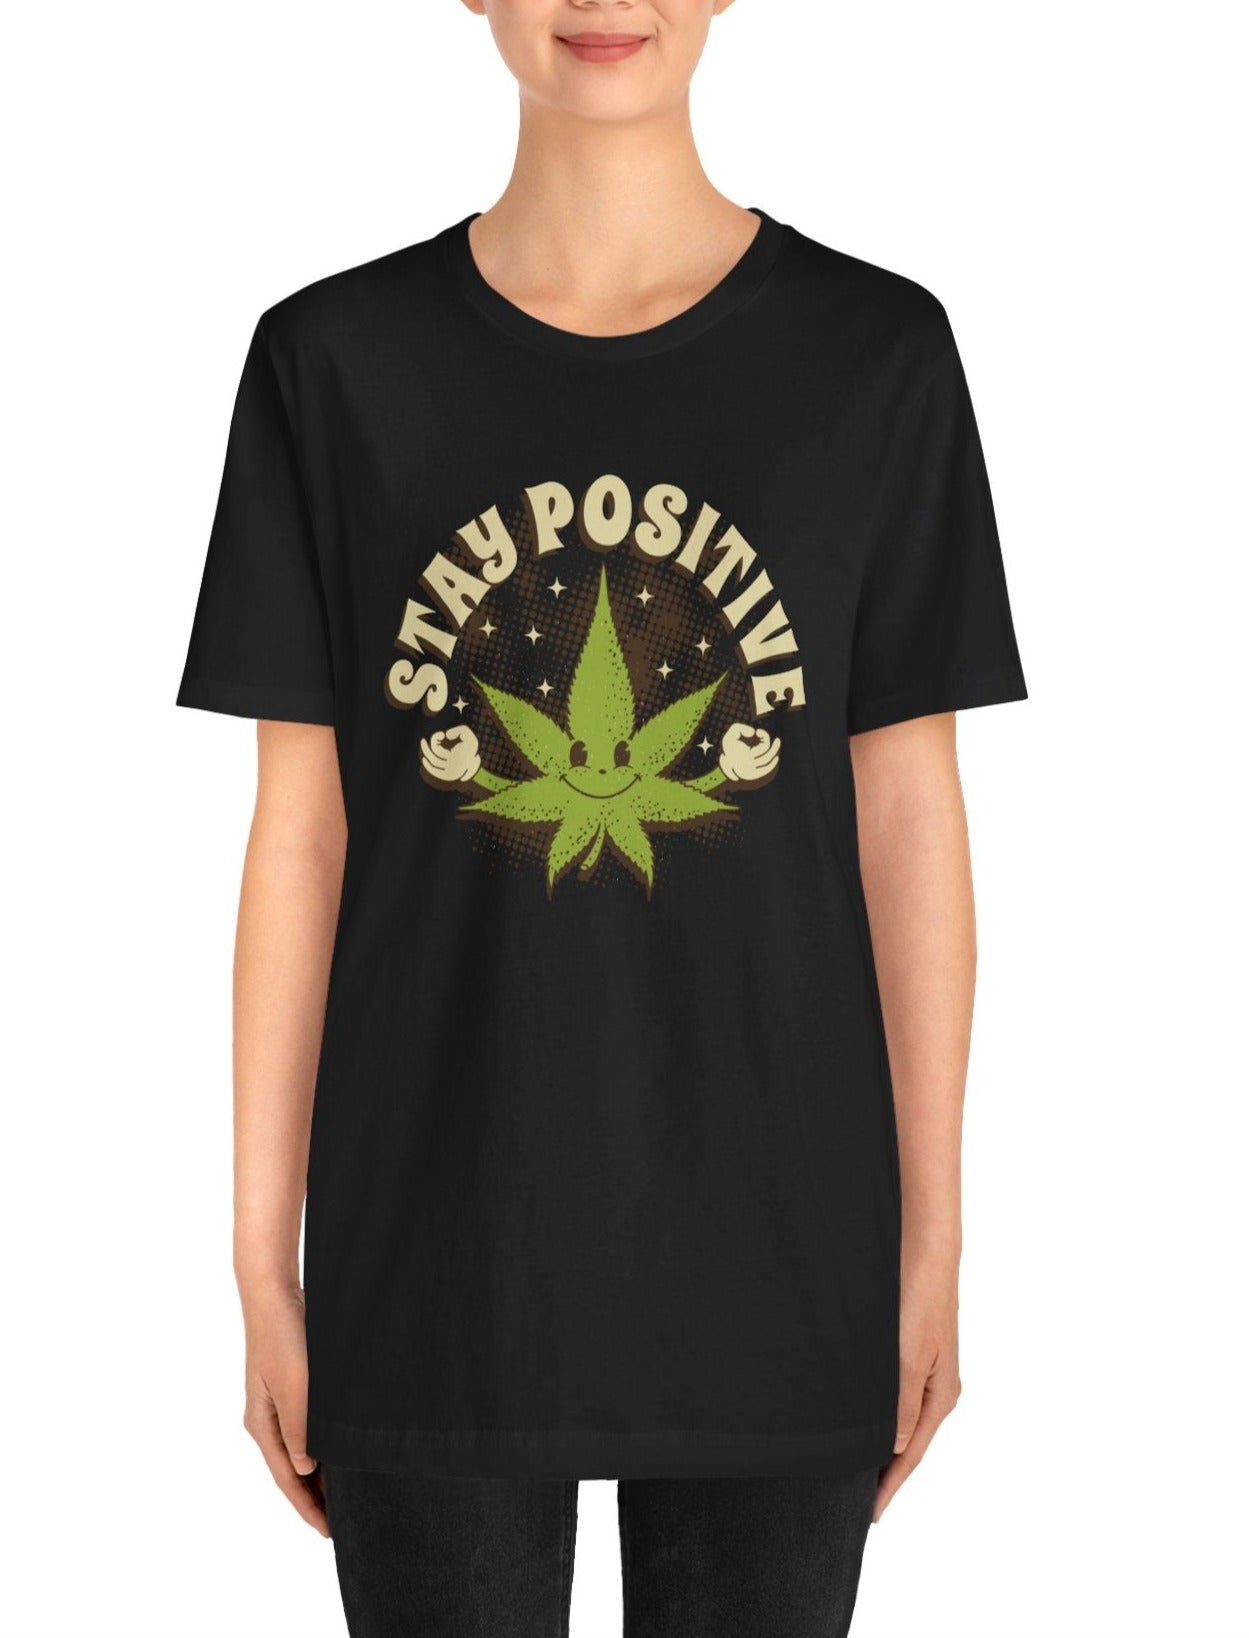 Stay Positive unisex t-shirt